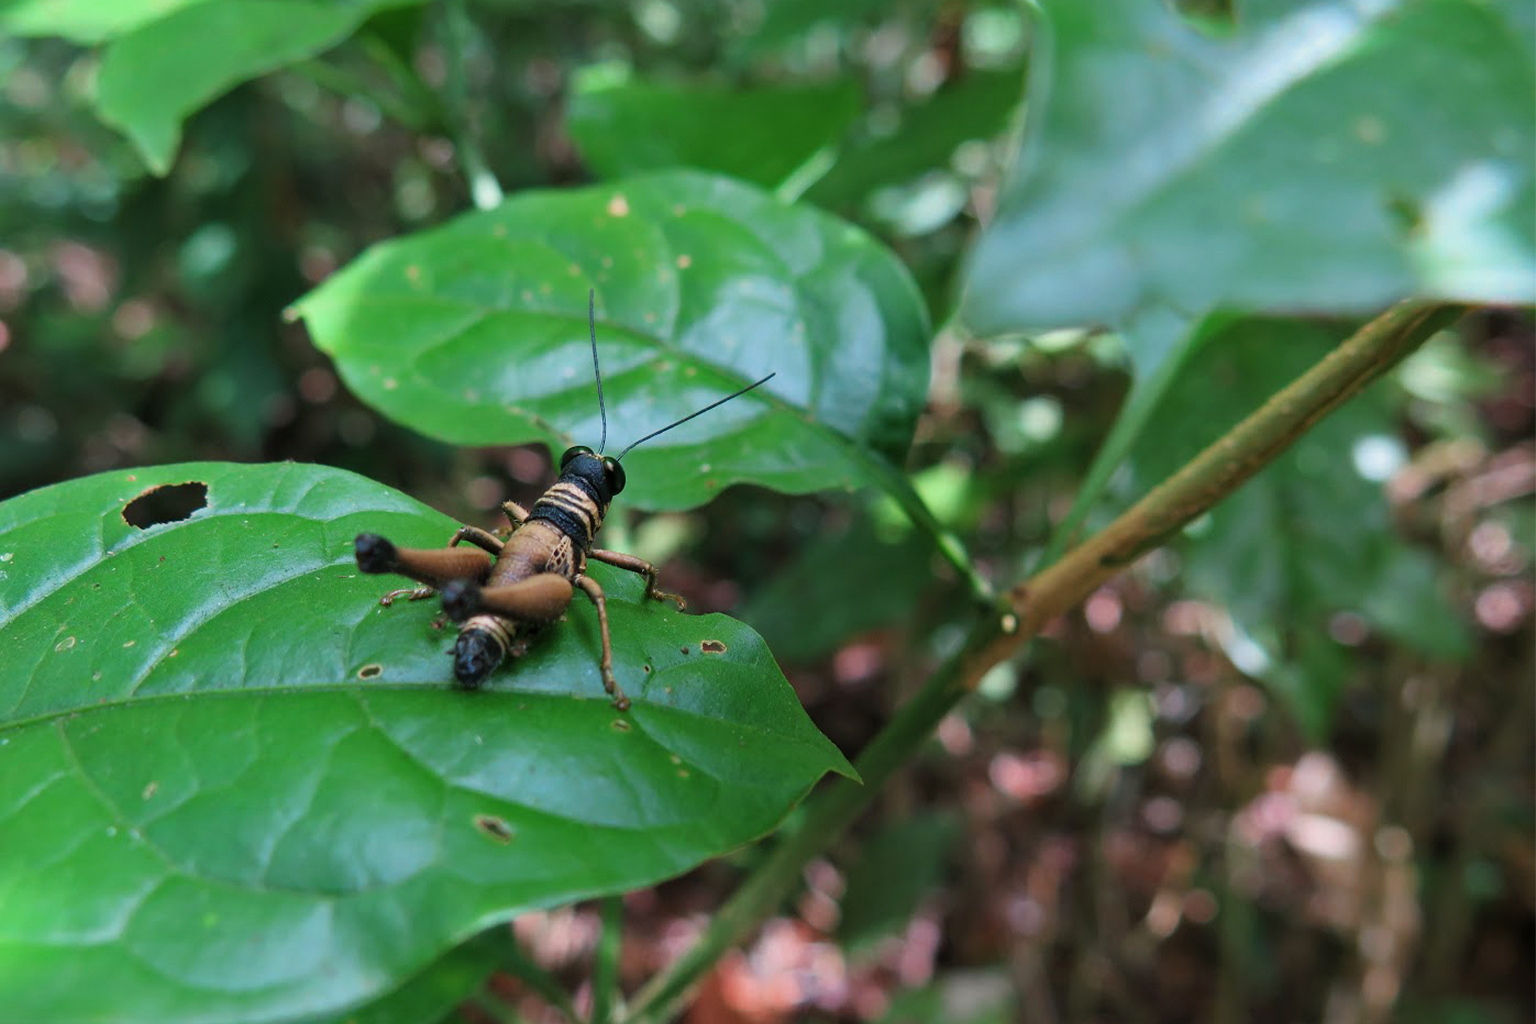 Unidentified insect in the Santarém region